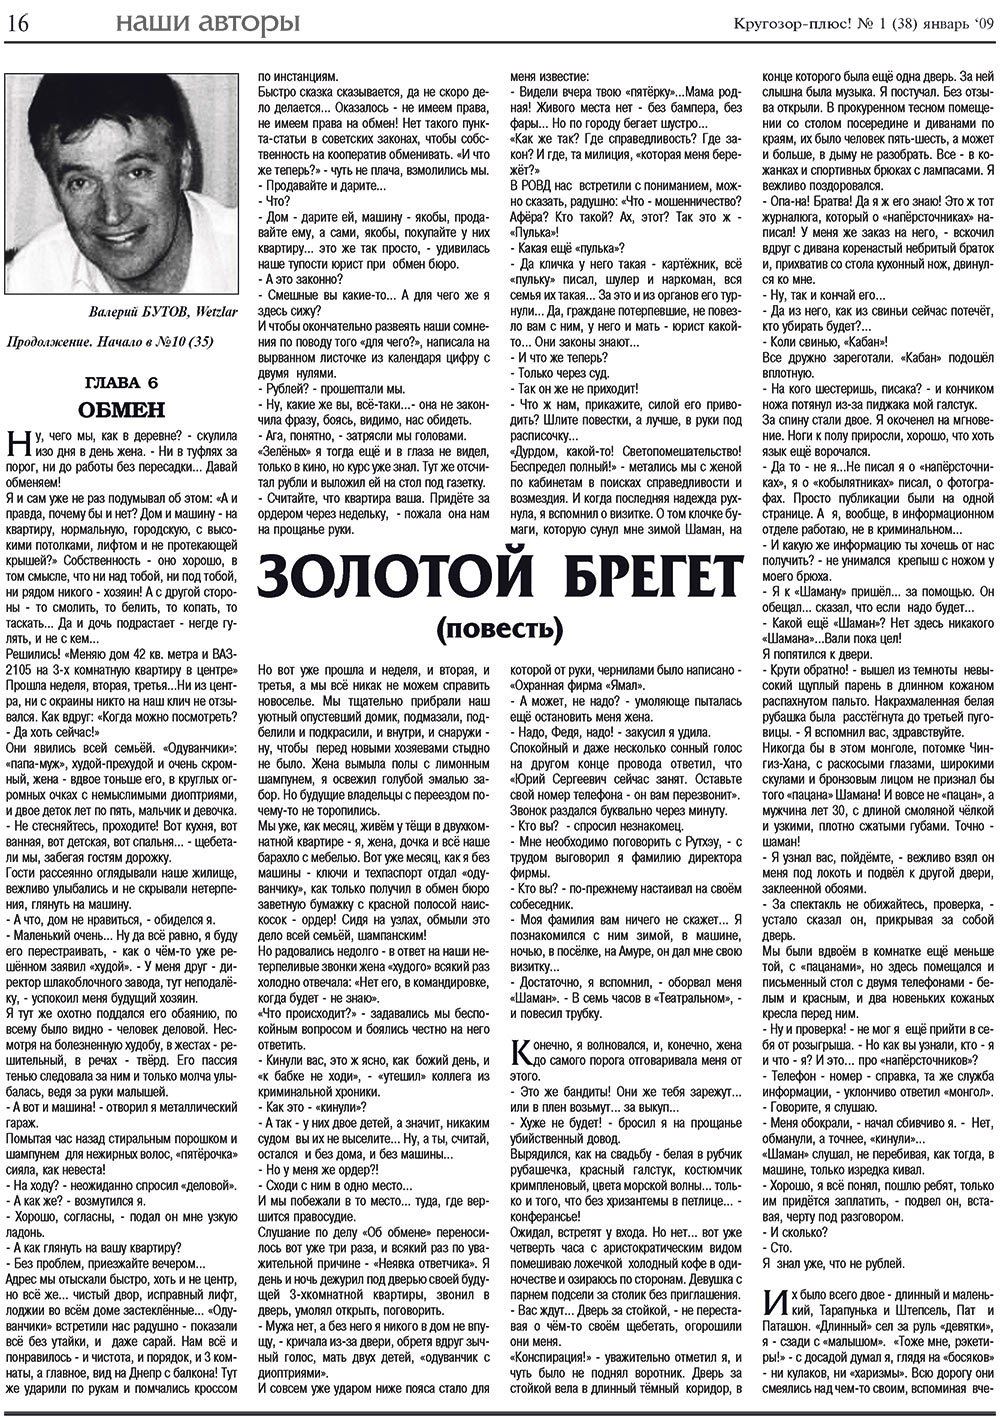 Кругозор плюс! (газета). 2009 год, номер 1, стр. 16